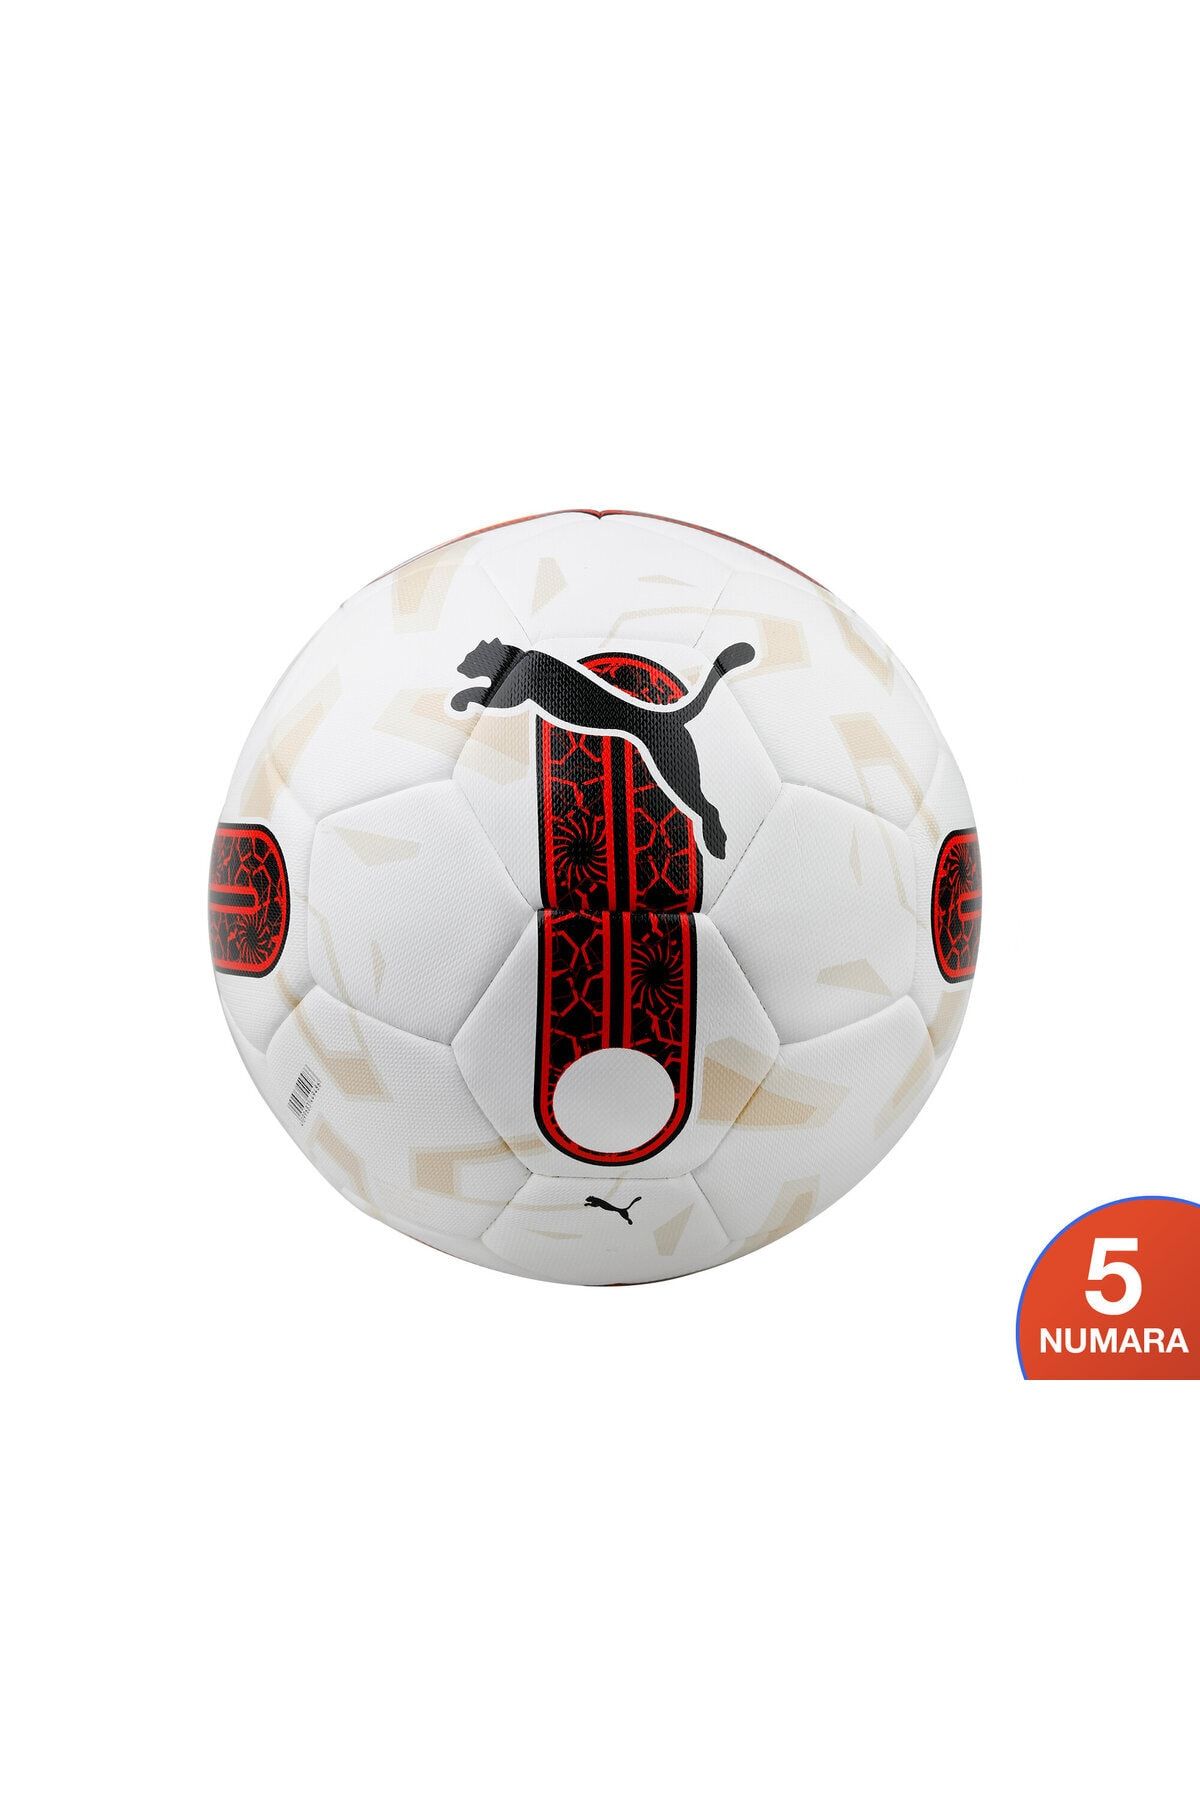 Puma Orbita Süper Lig 4 (Fifa Basic) Futbol Topu 8419601 Beyaz